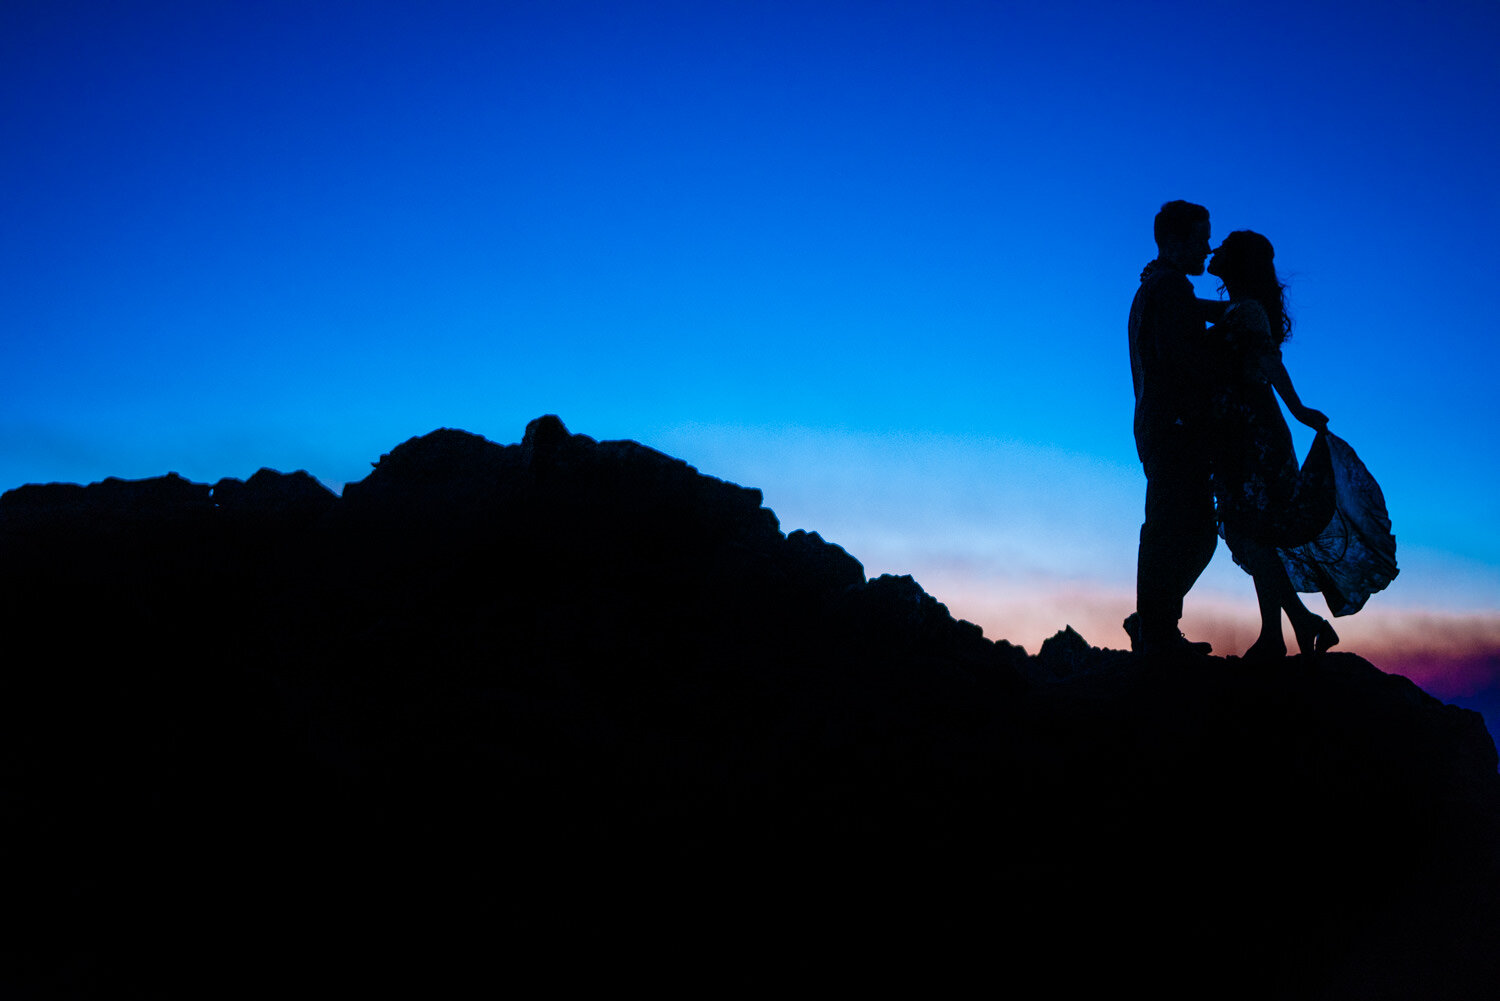  Rocky Mountain National Park Engagements | Estes Park Wedding Photographer | JMGant Photography 